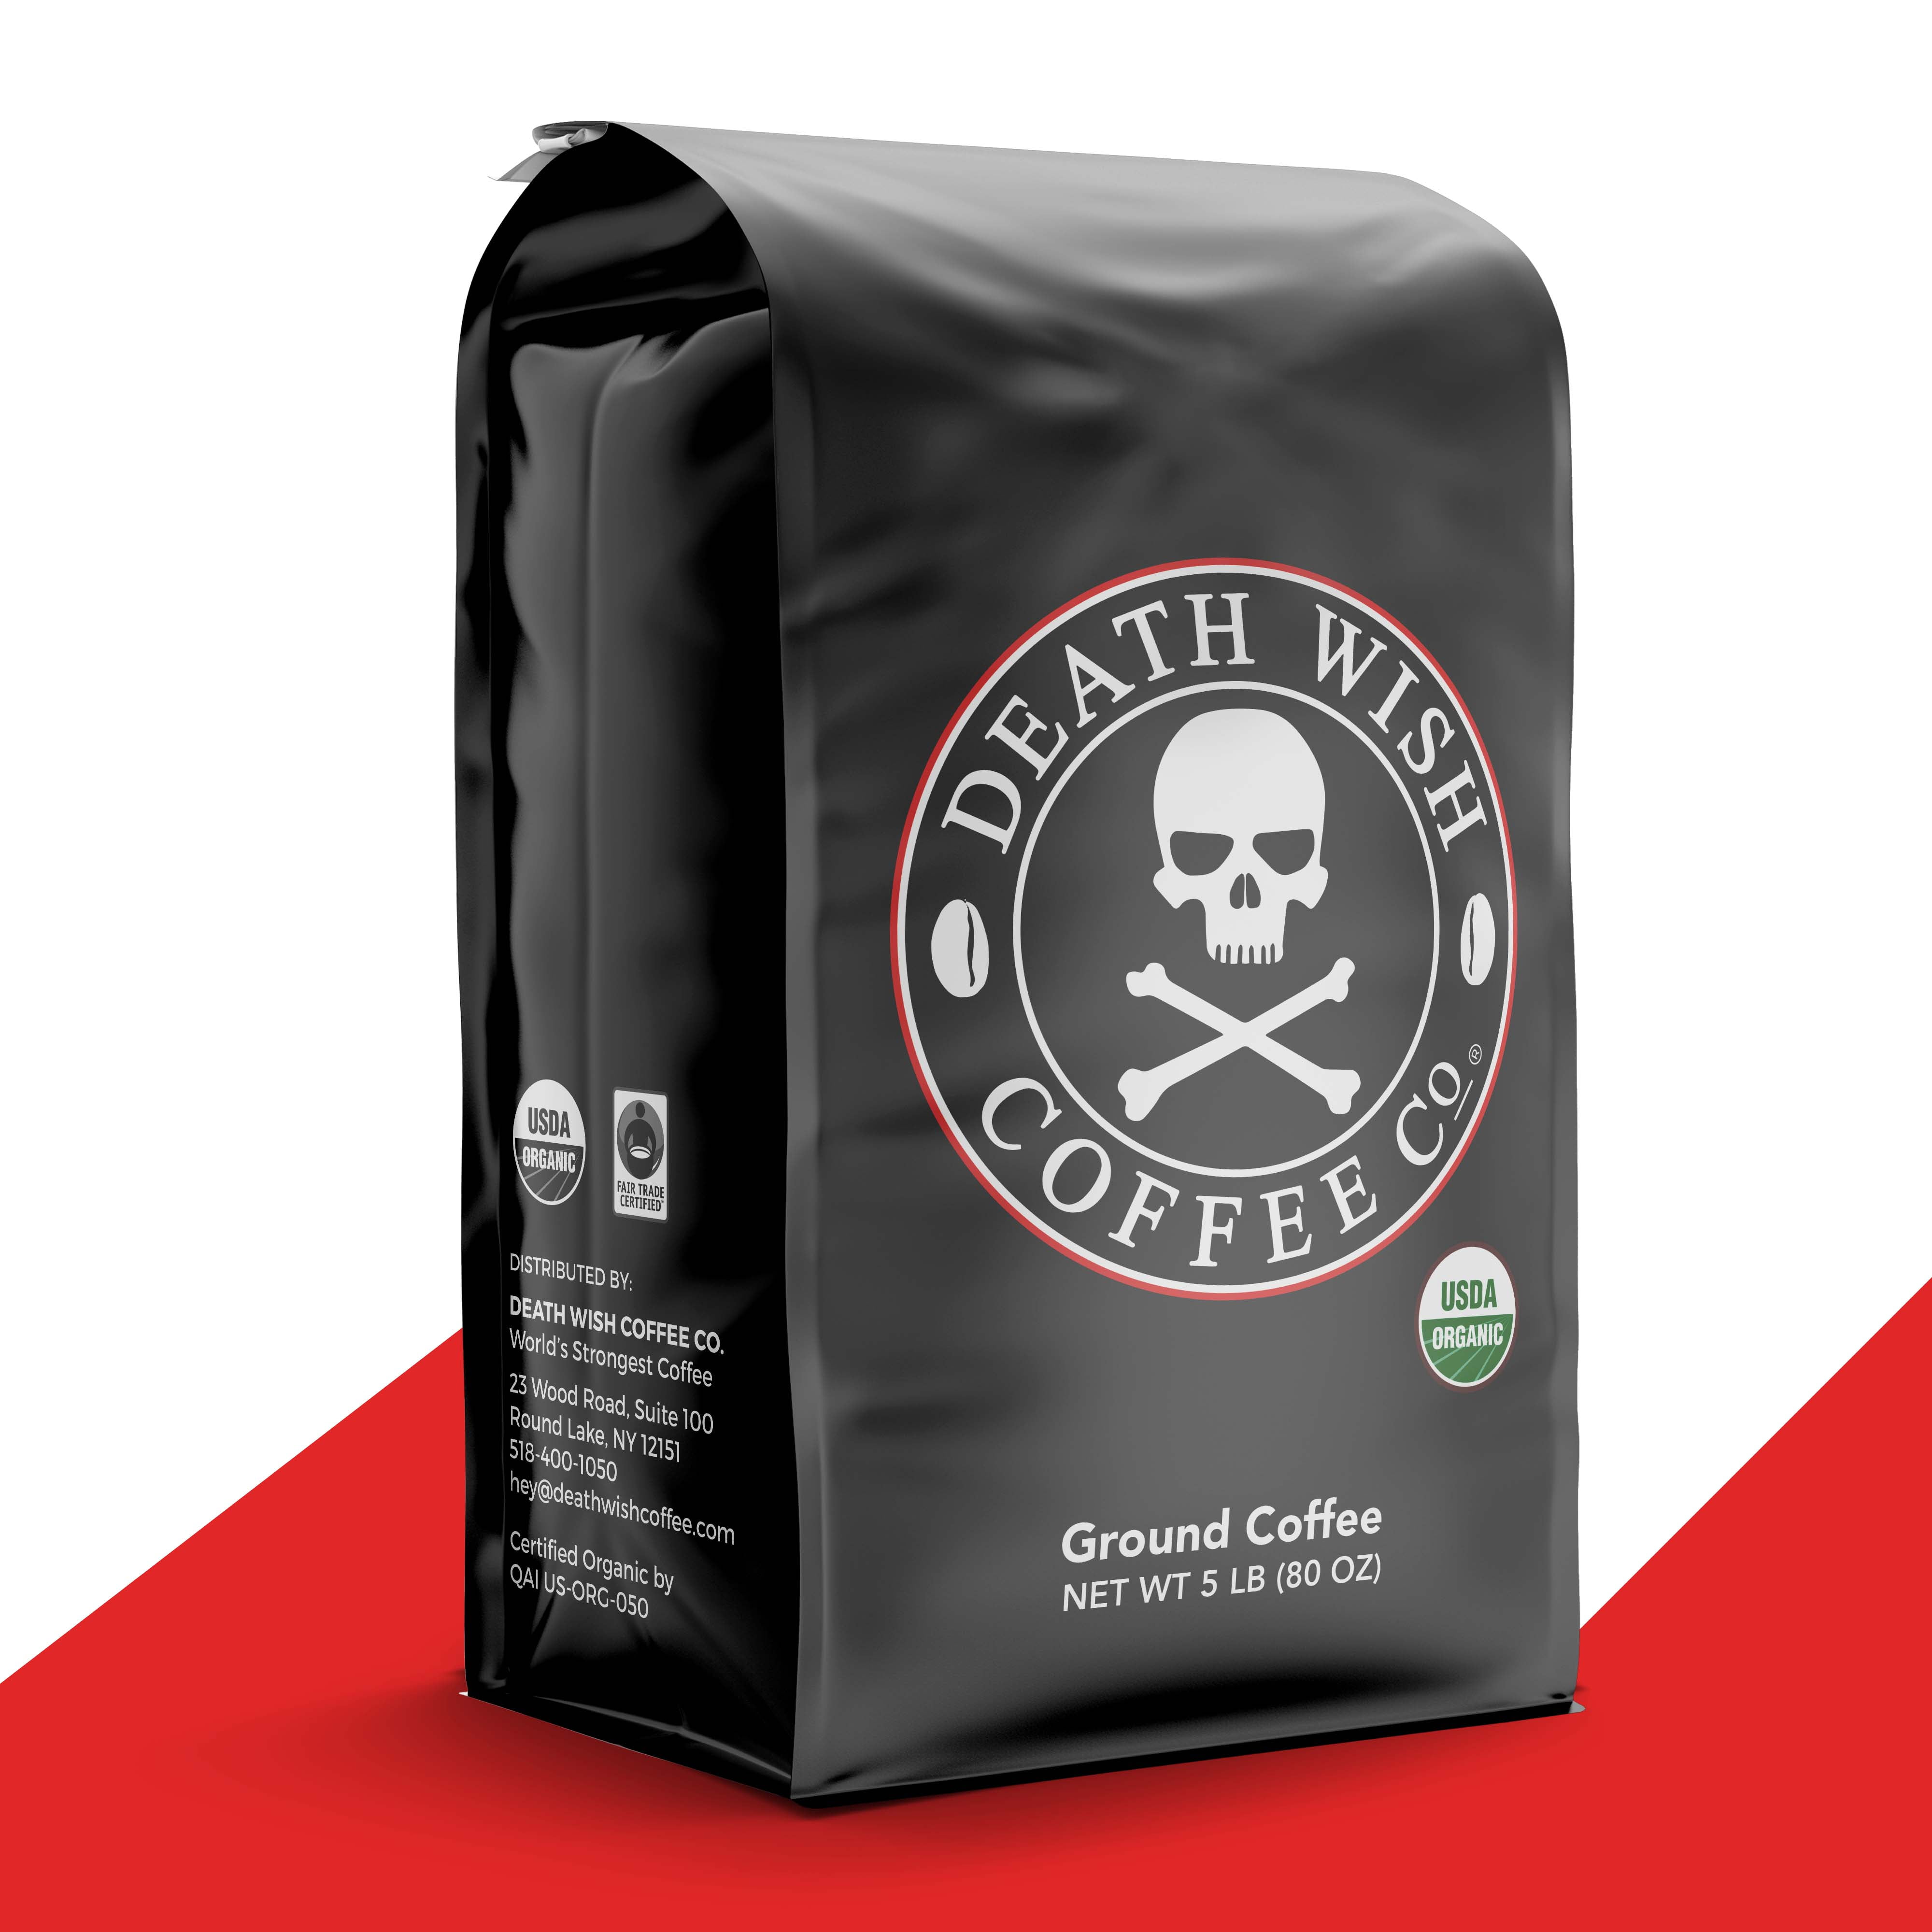 Death Wish Coffee. Кофе смерть. Basic Dark кофе. Death Wish кофе фото. Кофеен strong coffee